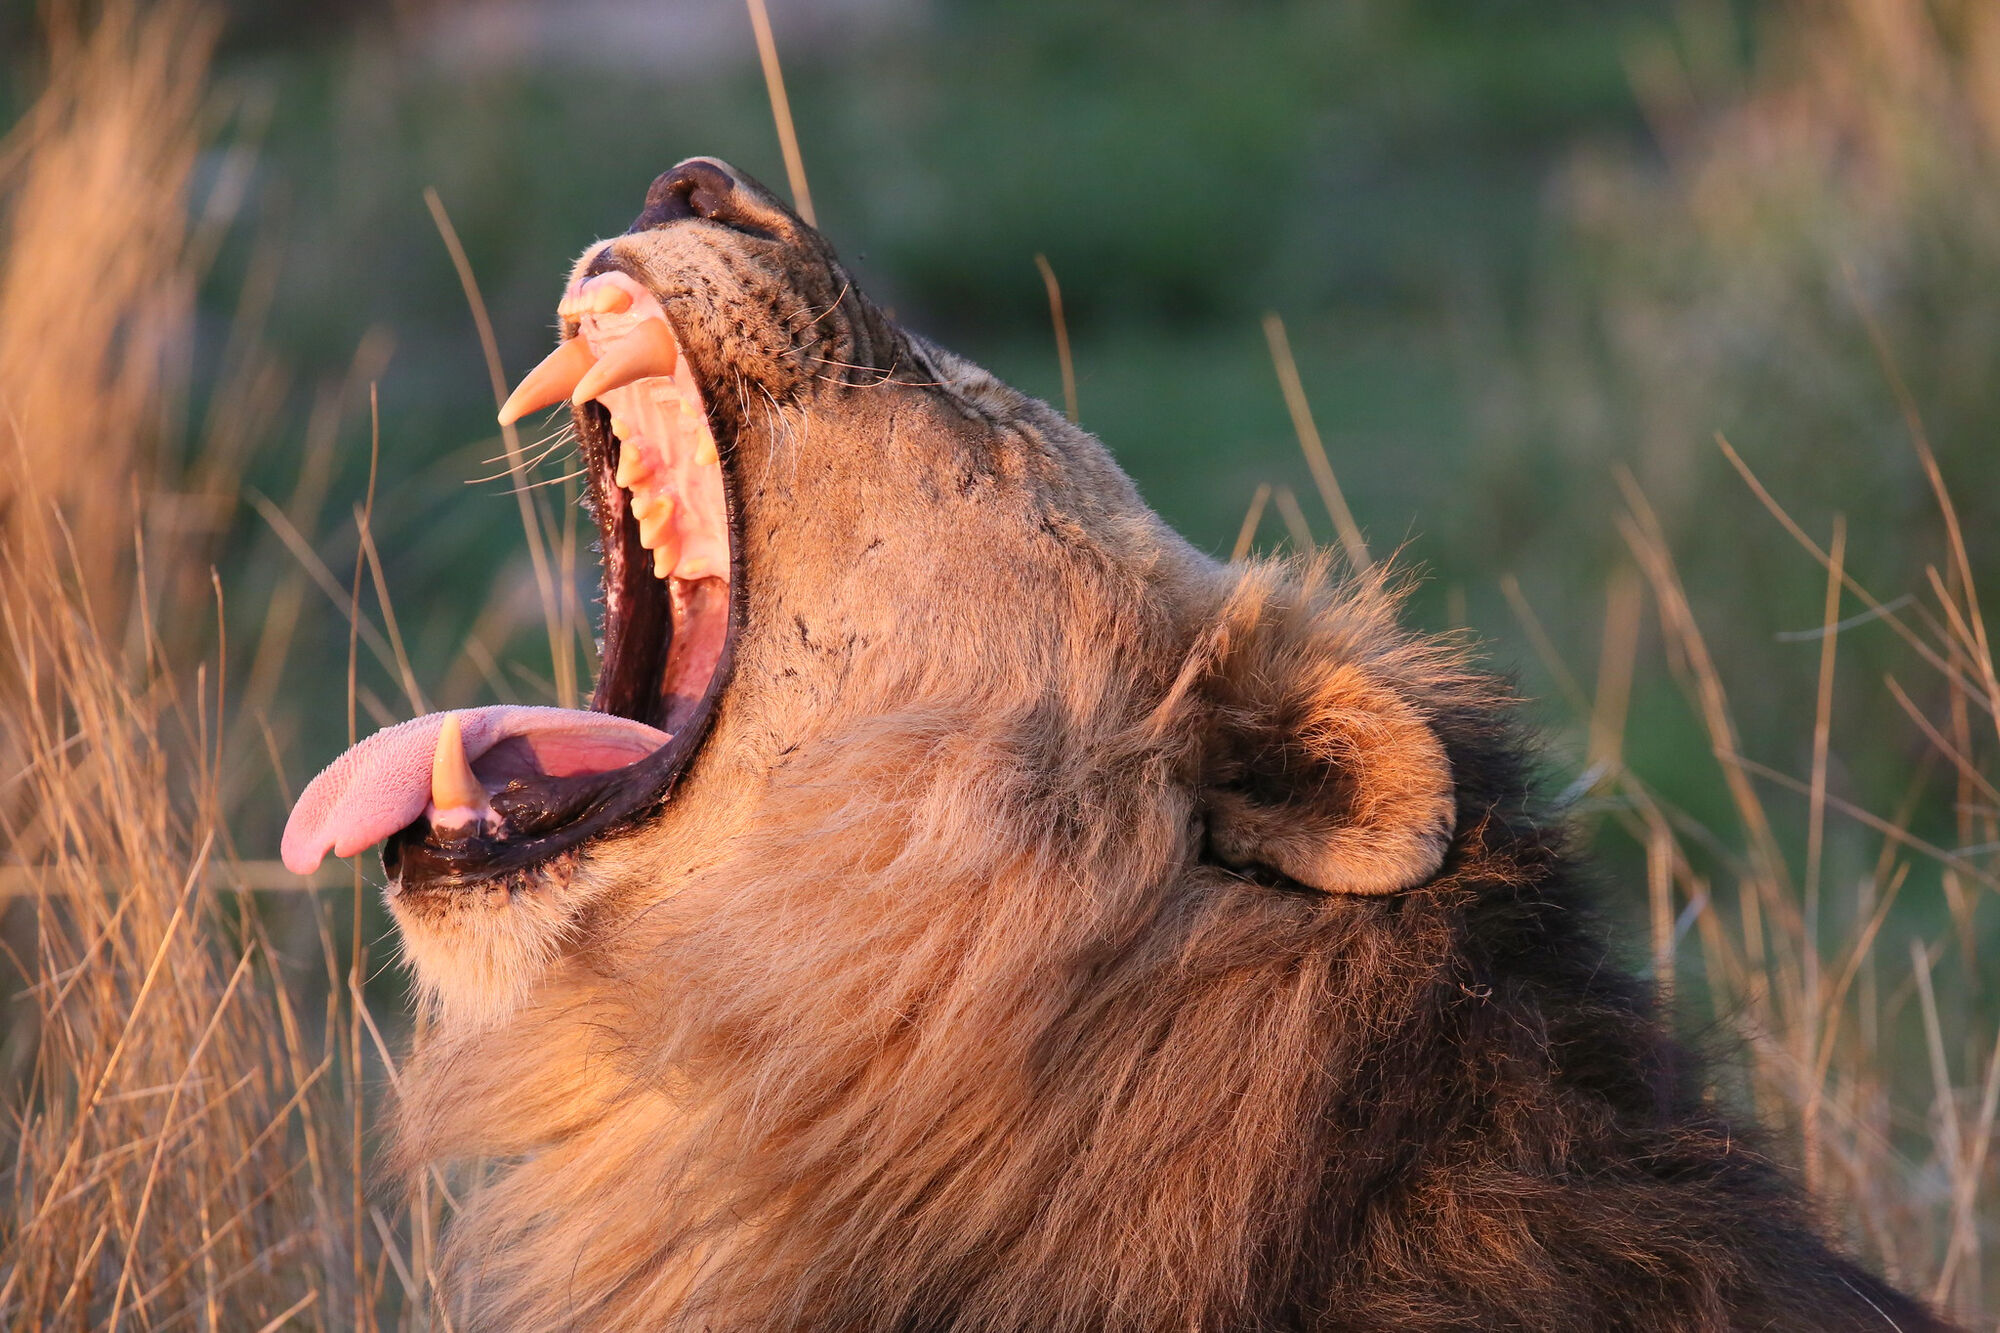 Yarning Lion at Madikwe Game Reserve, home to the Mosetlha Bush Camp